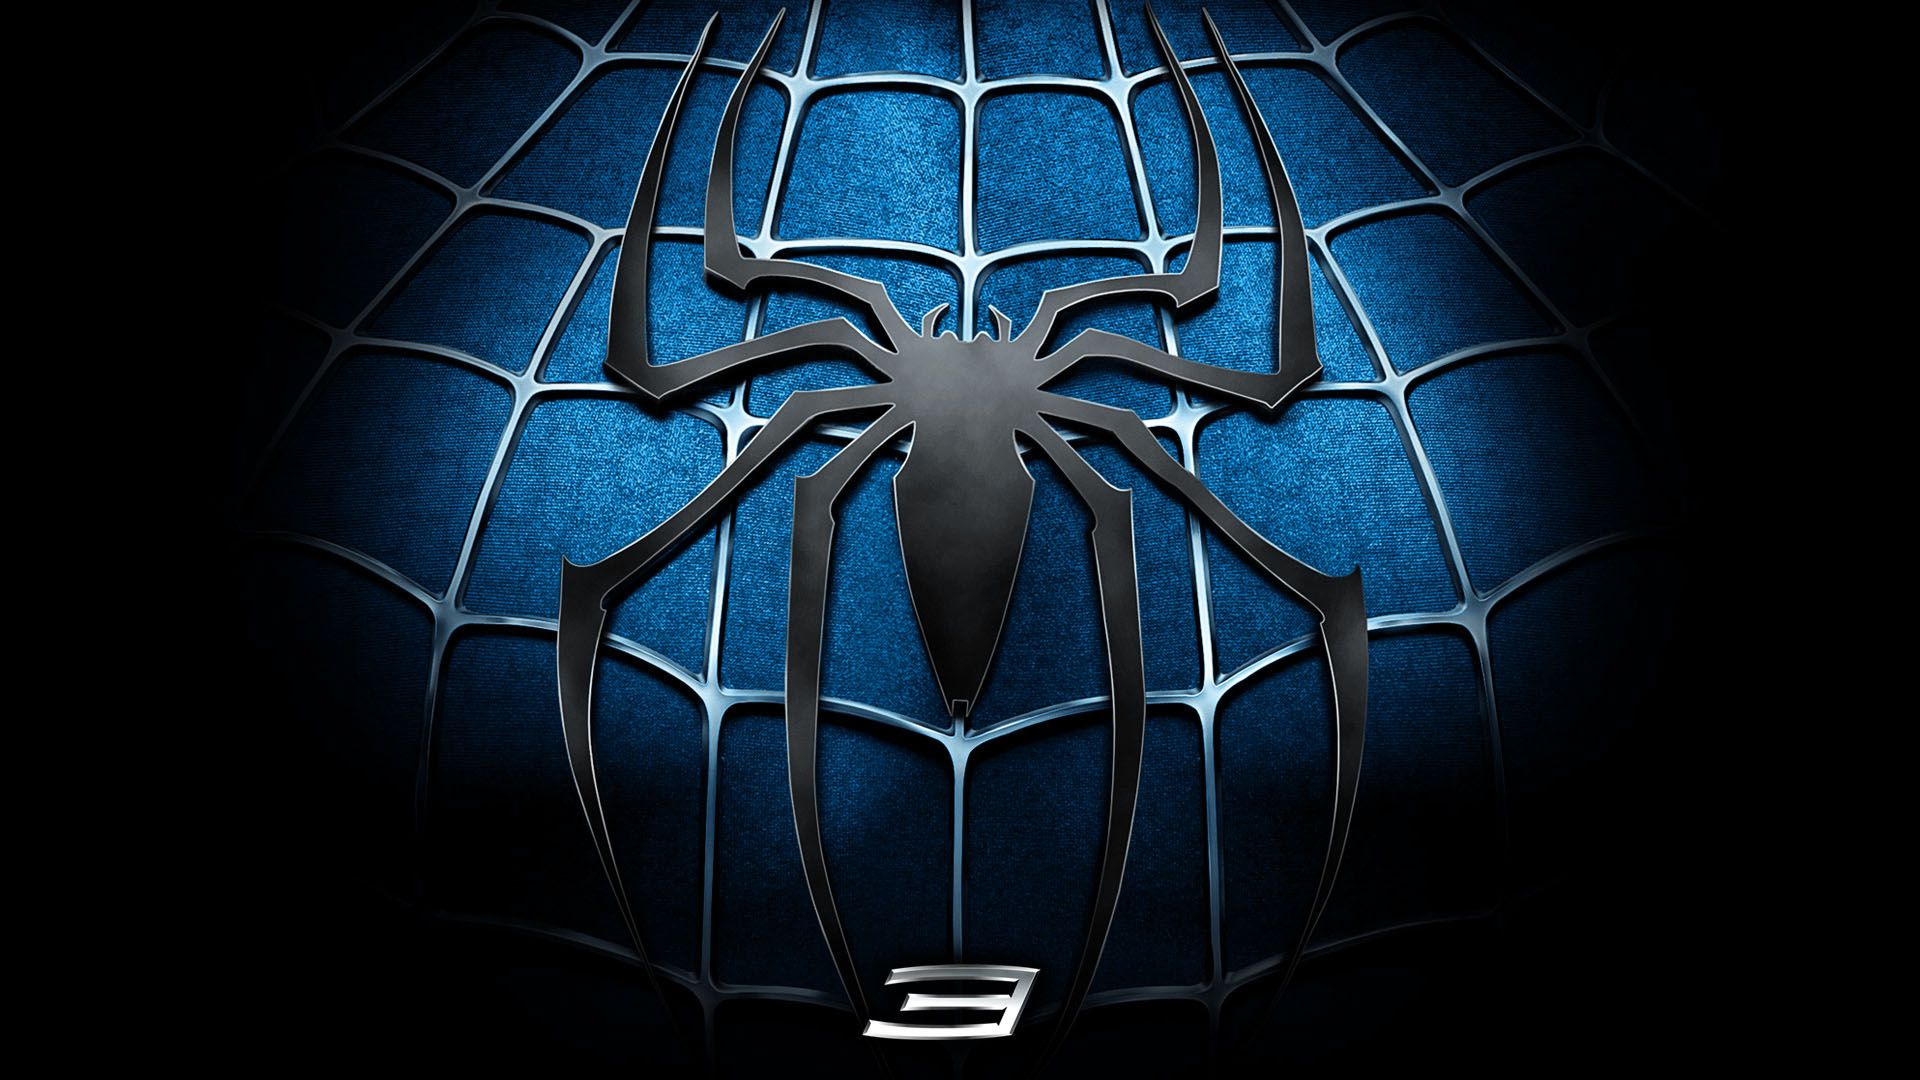 Black Spiderman 3D Wallpapers